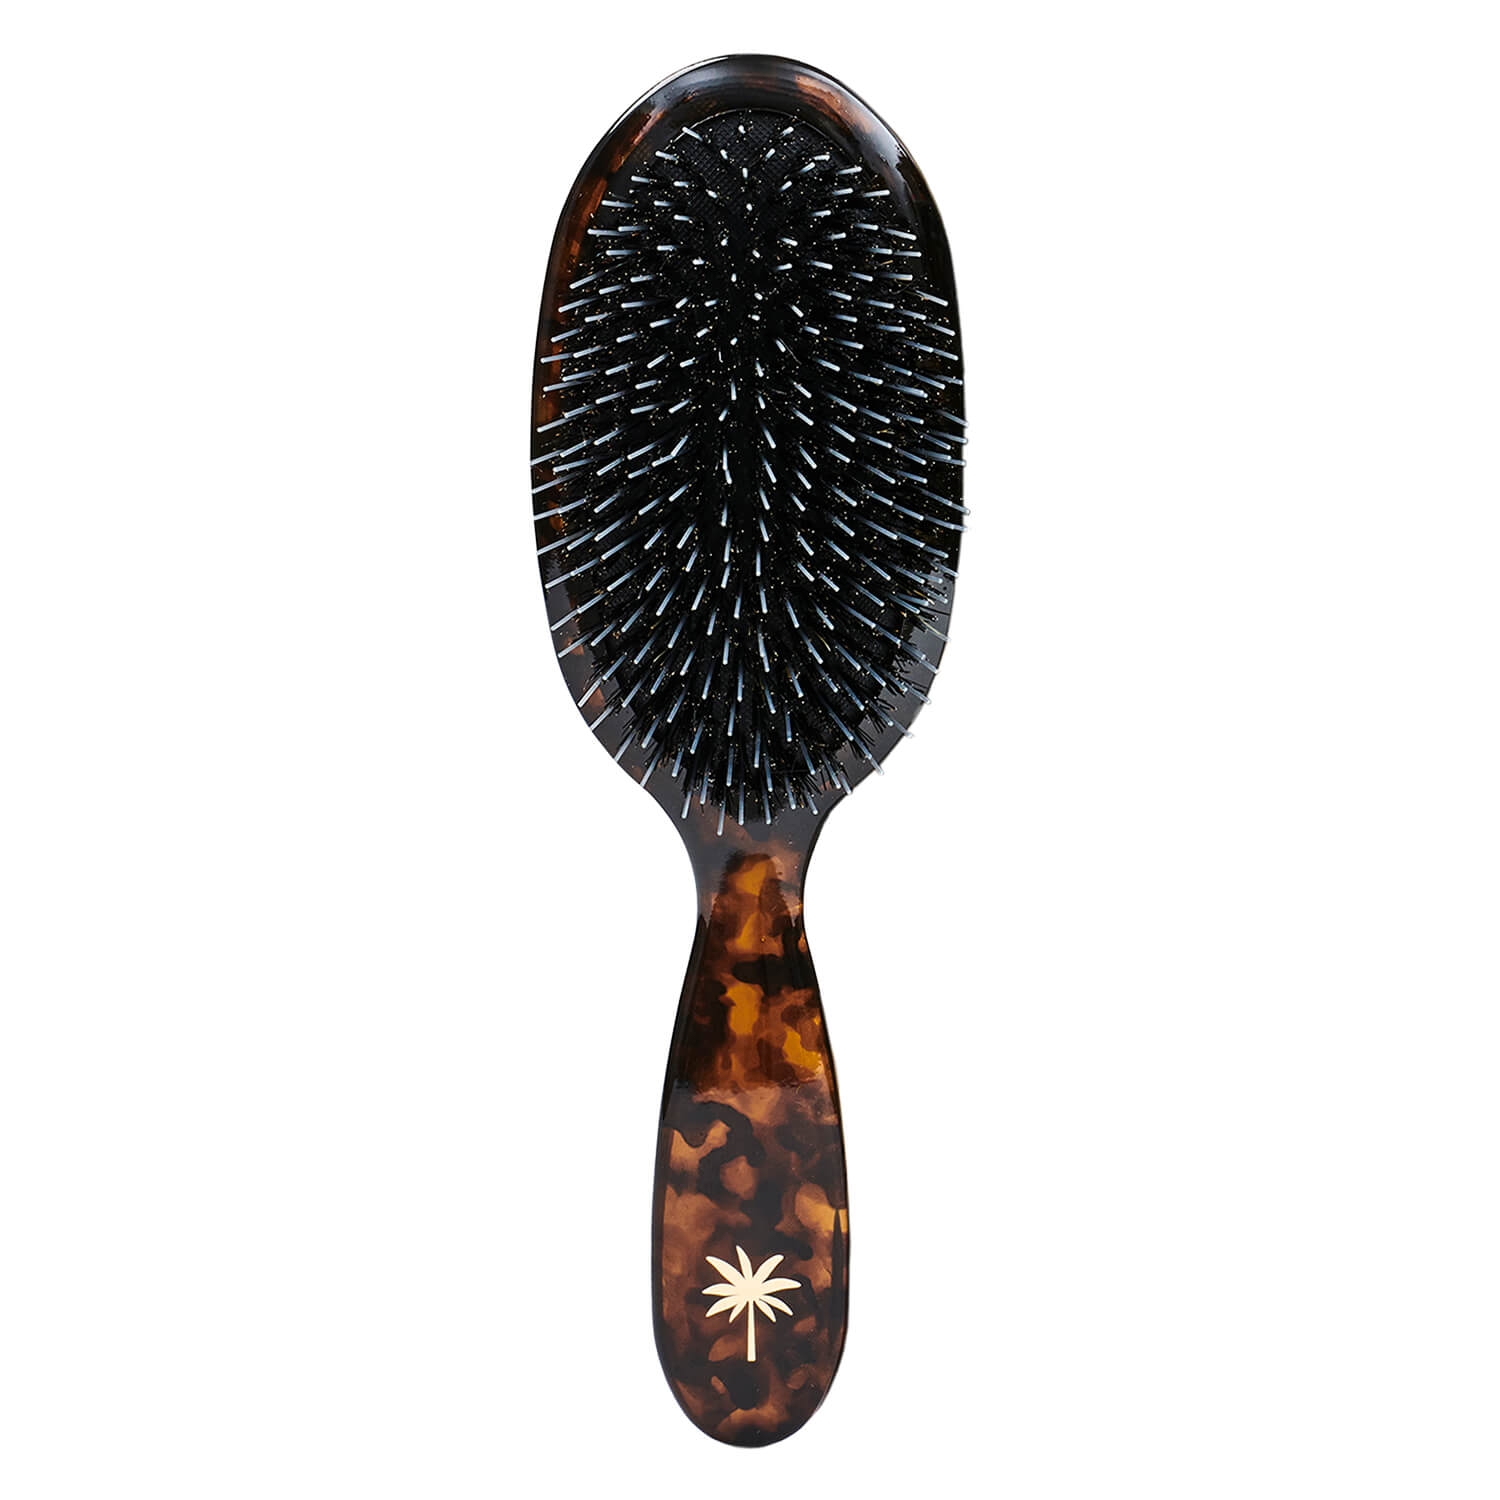 Produktbild von Fan Palm - Hair Brush Medium Tortoise Shell